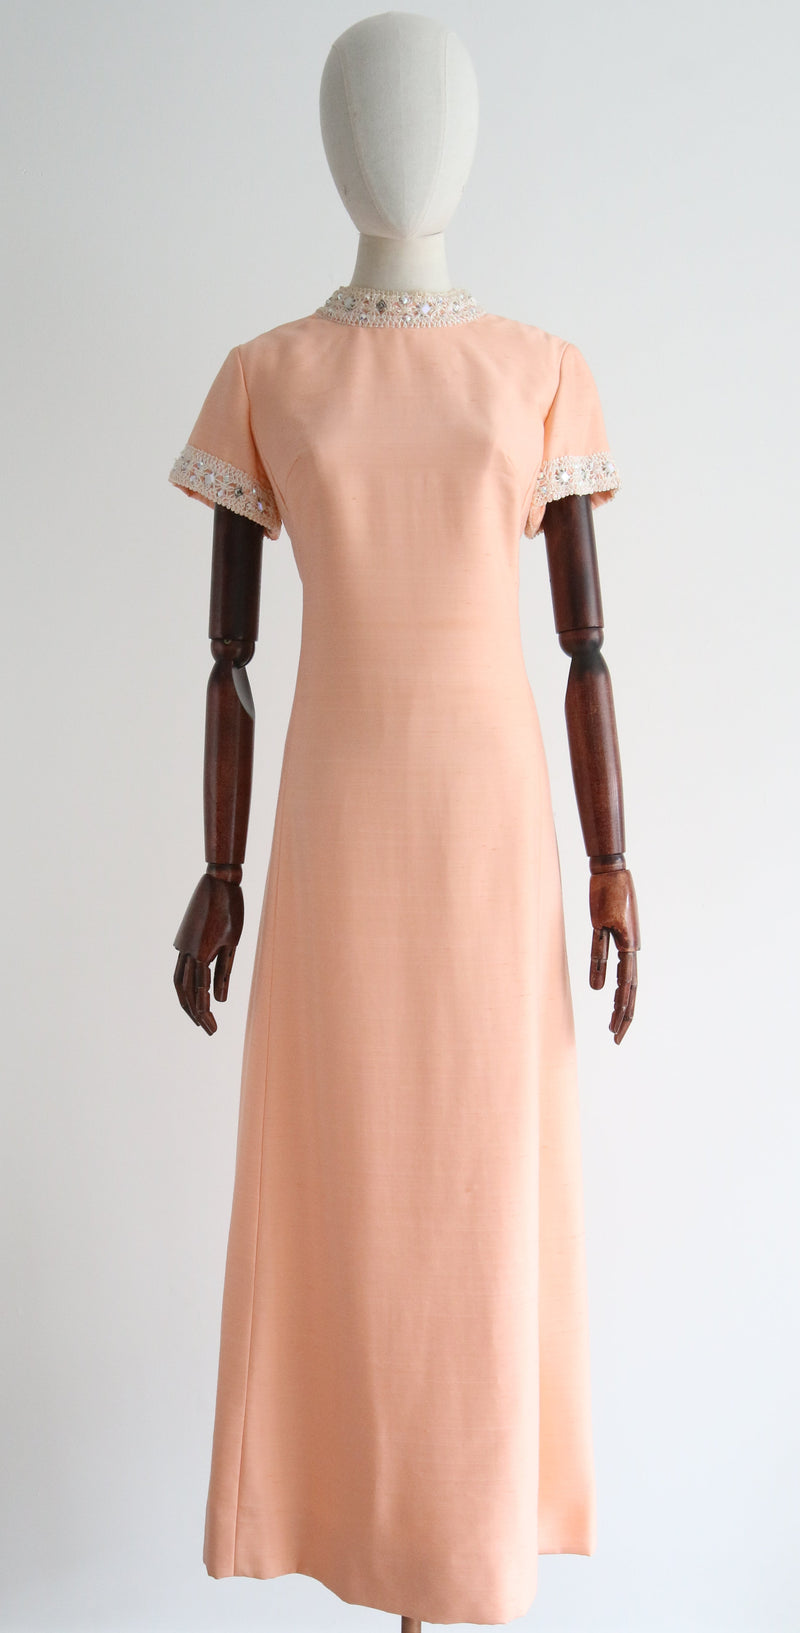 "Cream Peach" Vintage 1960's Cream Peach Rhinestone Embellished Dress UK 12 US 8